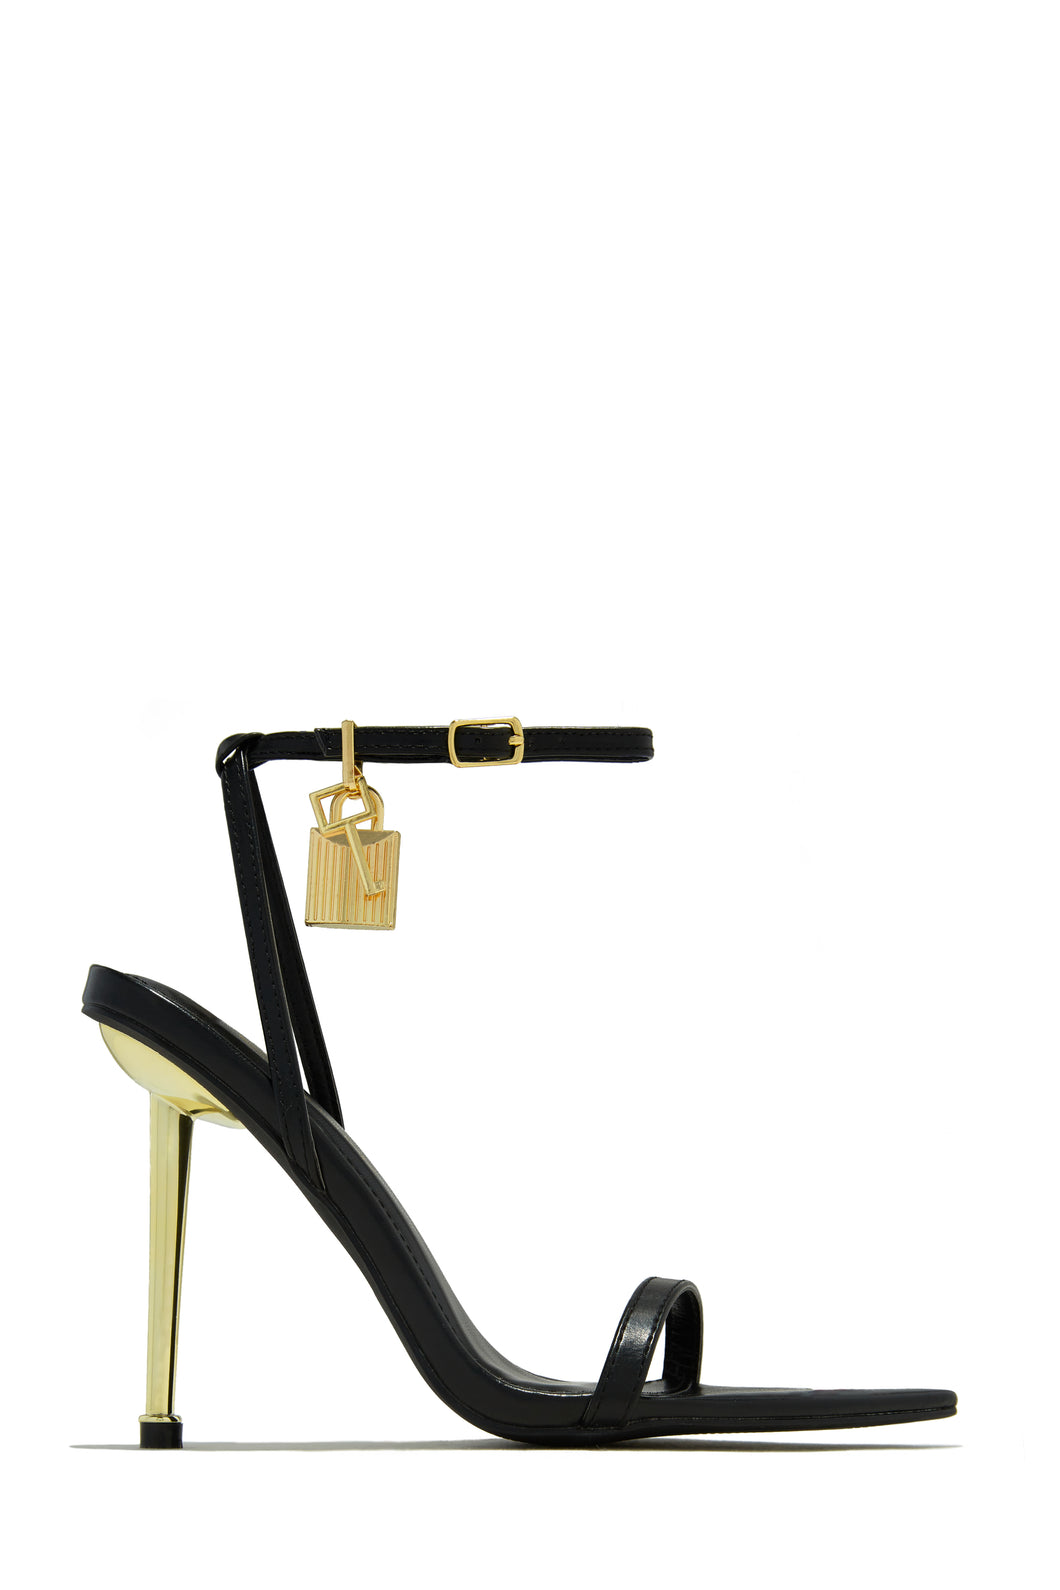 Black Single Sole High Heels with Gold-Tone Lock & Key Pendant